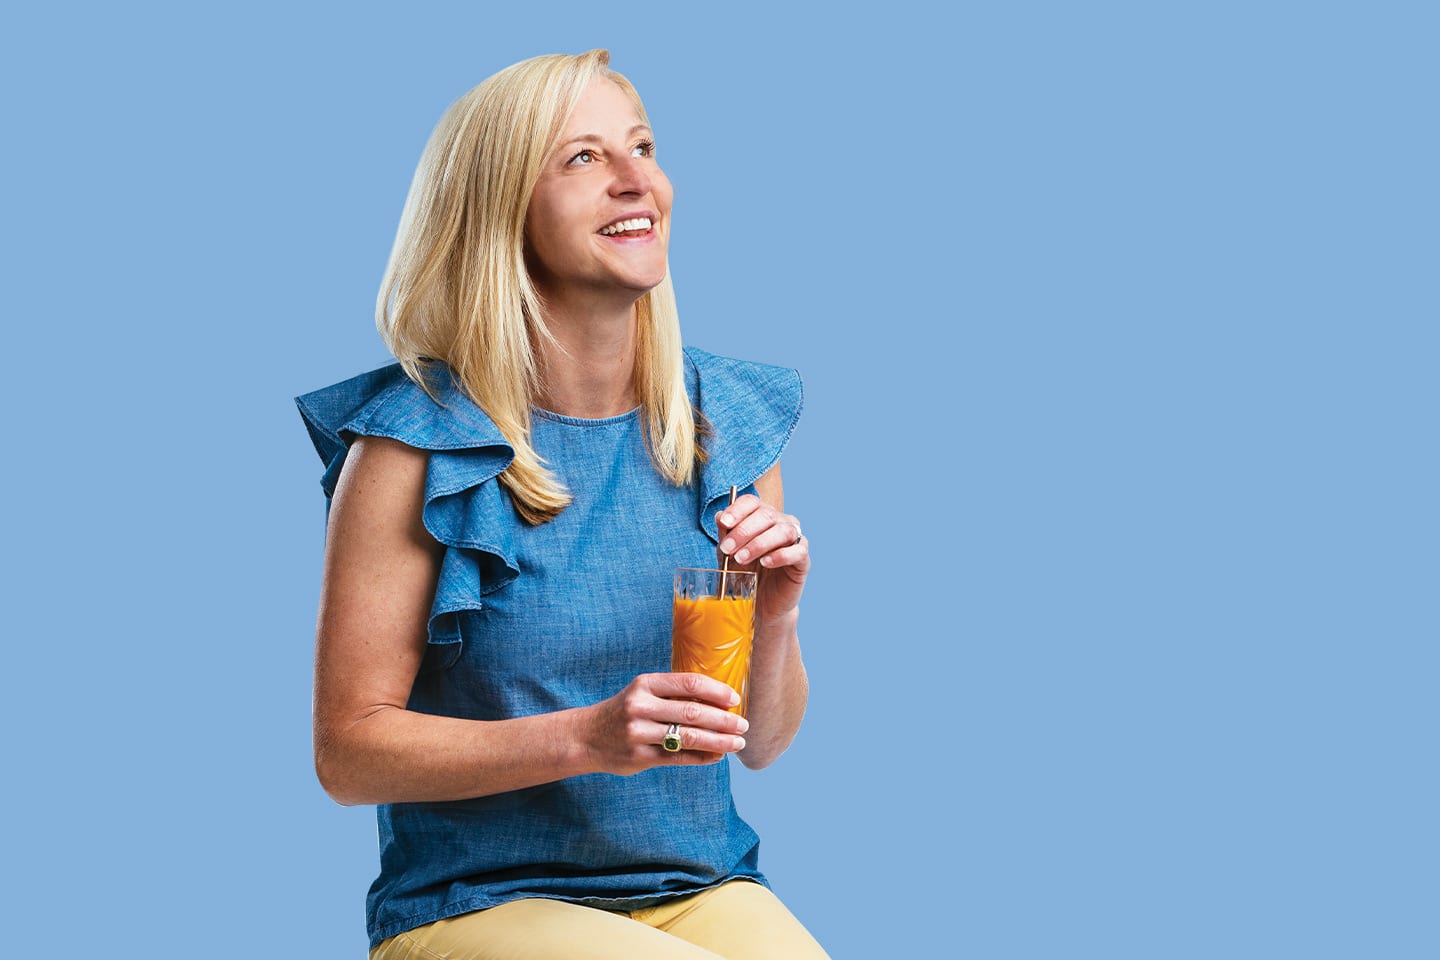 Amy Jo Osborn HealthScope Summer 2019 cover model sitting on stool drinking juice in chattanooga